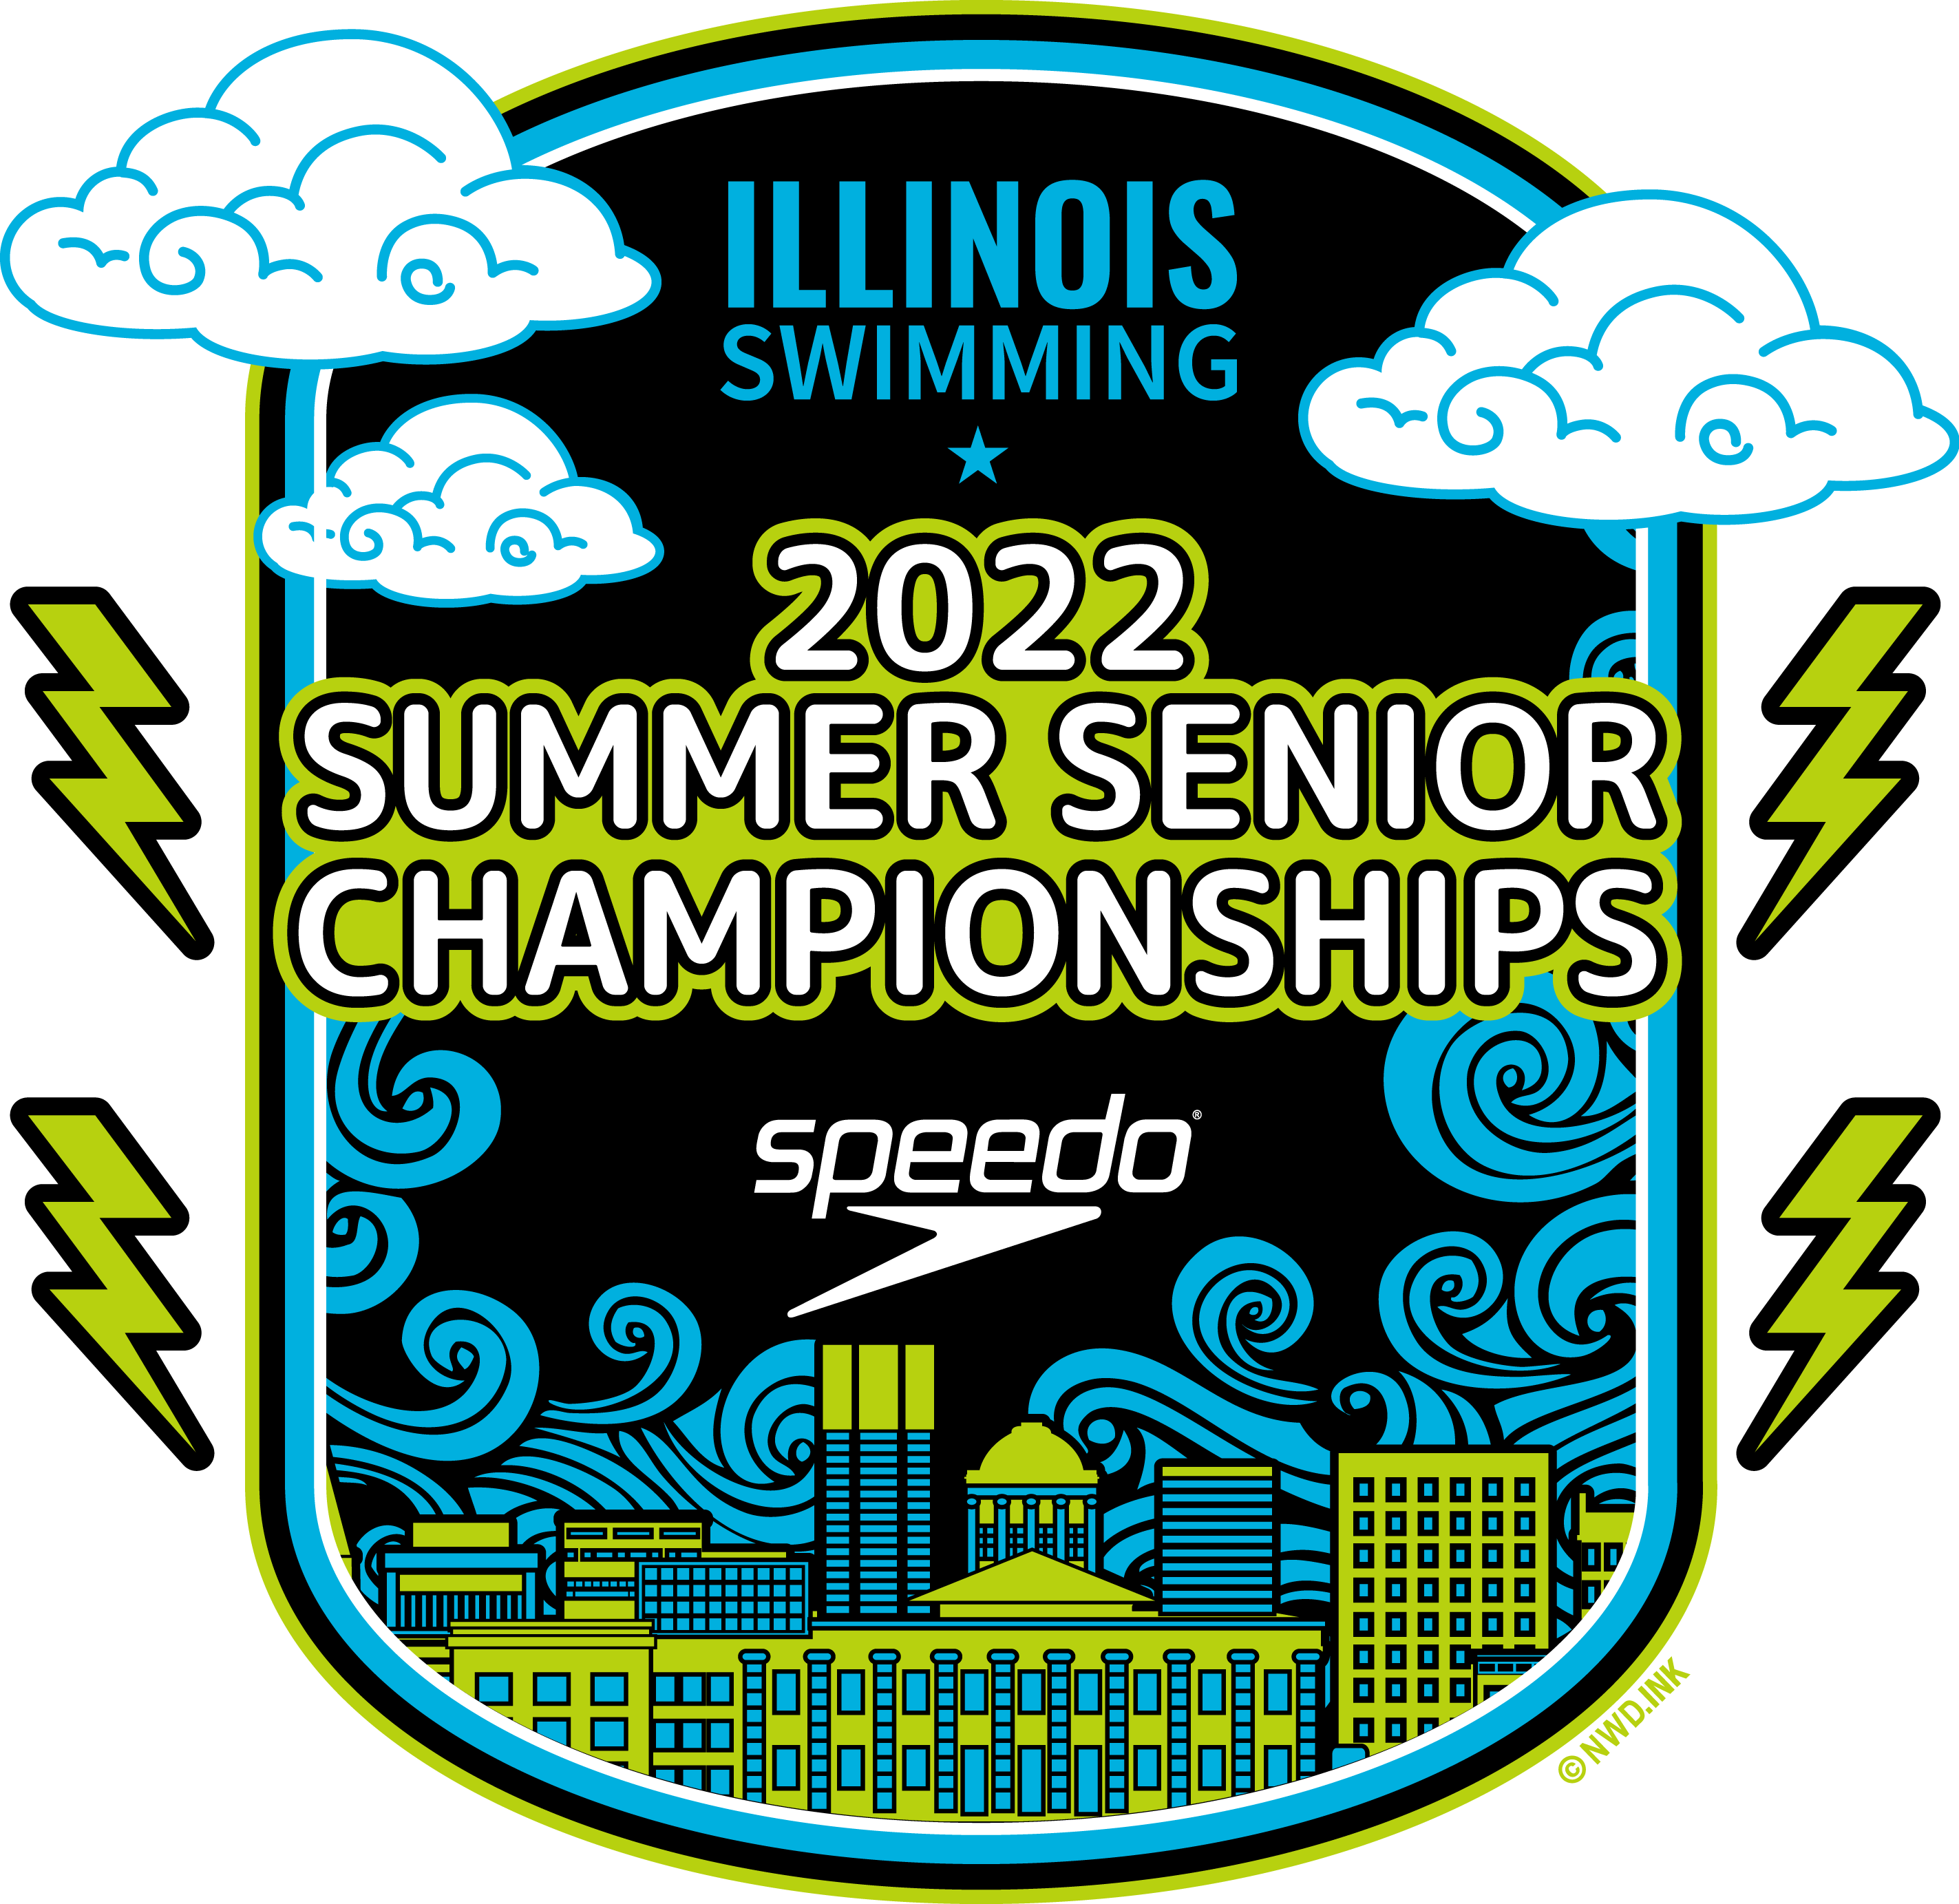 Illinois Swimming LSC Championship Meets